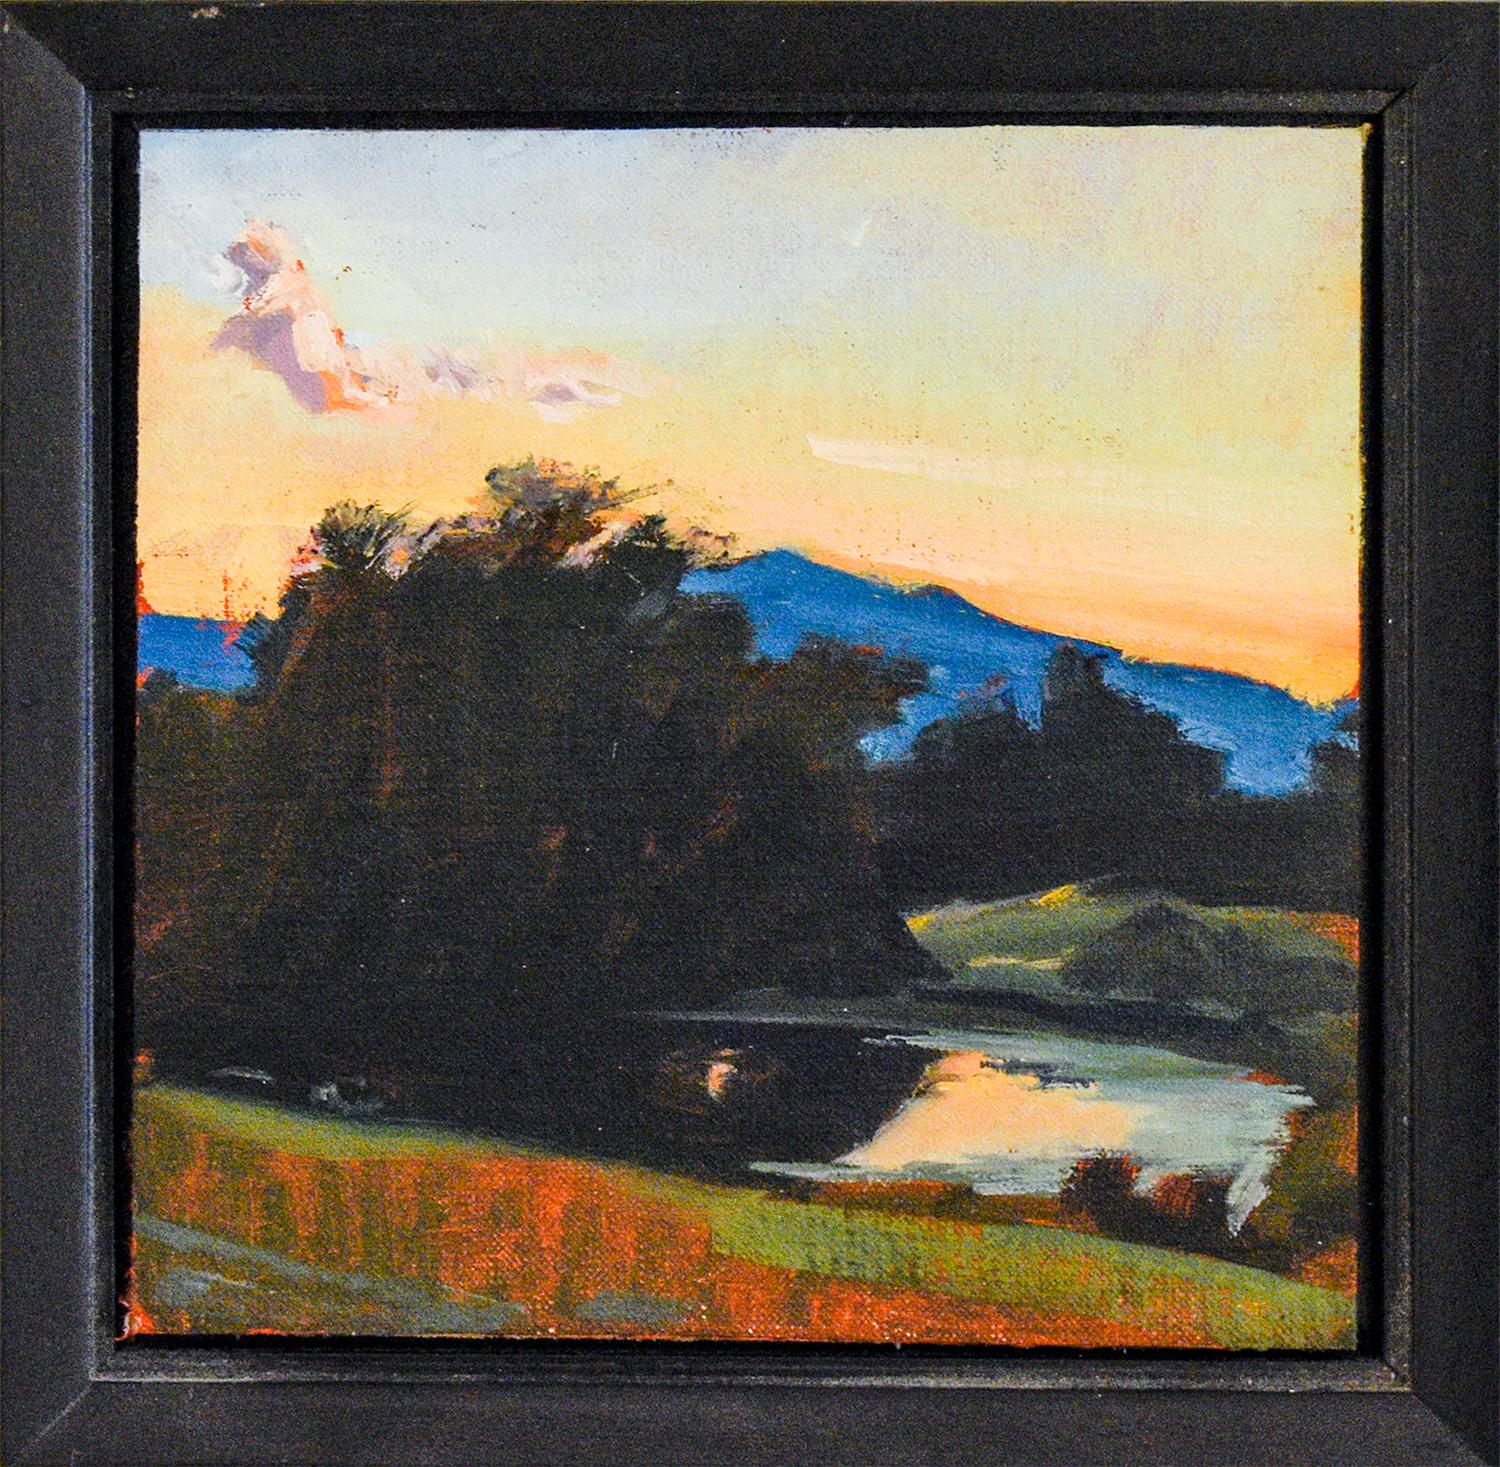 John Kelly Landscape Painting – Herbstlandschaft: Gerahmtes Ölgemälde En Plein Air von Hudson ValIey, Impressionist